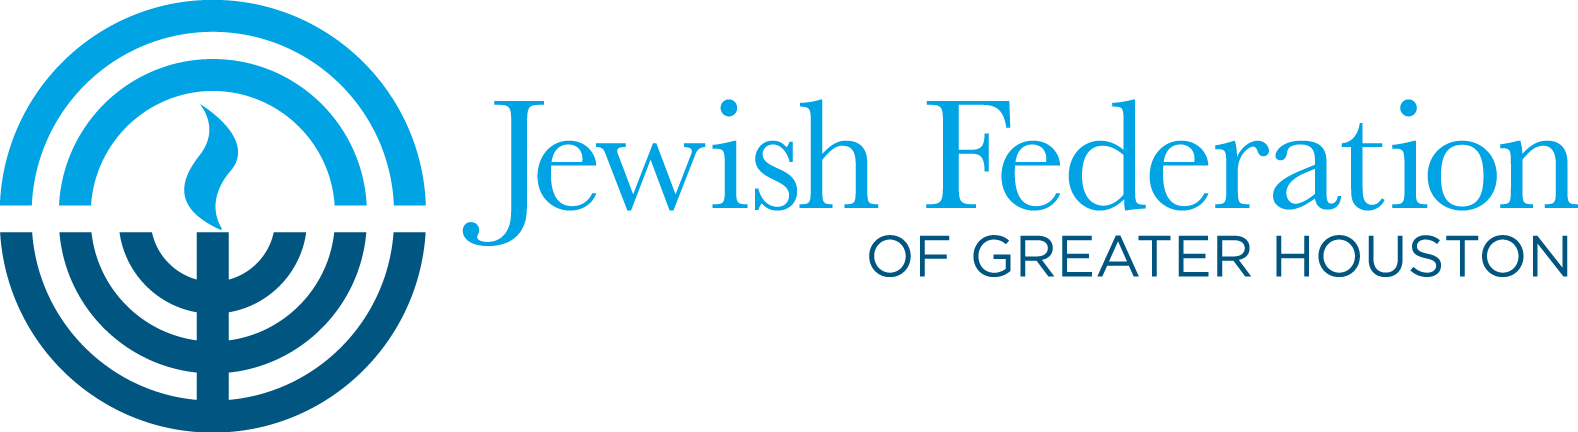 Jewish Logo - Branding and Logos. Jewish Federation of Greater Houston